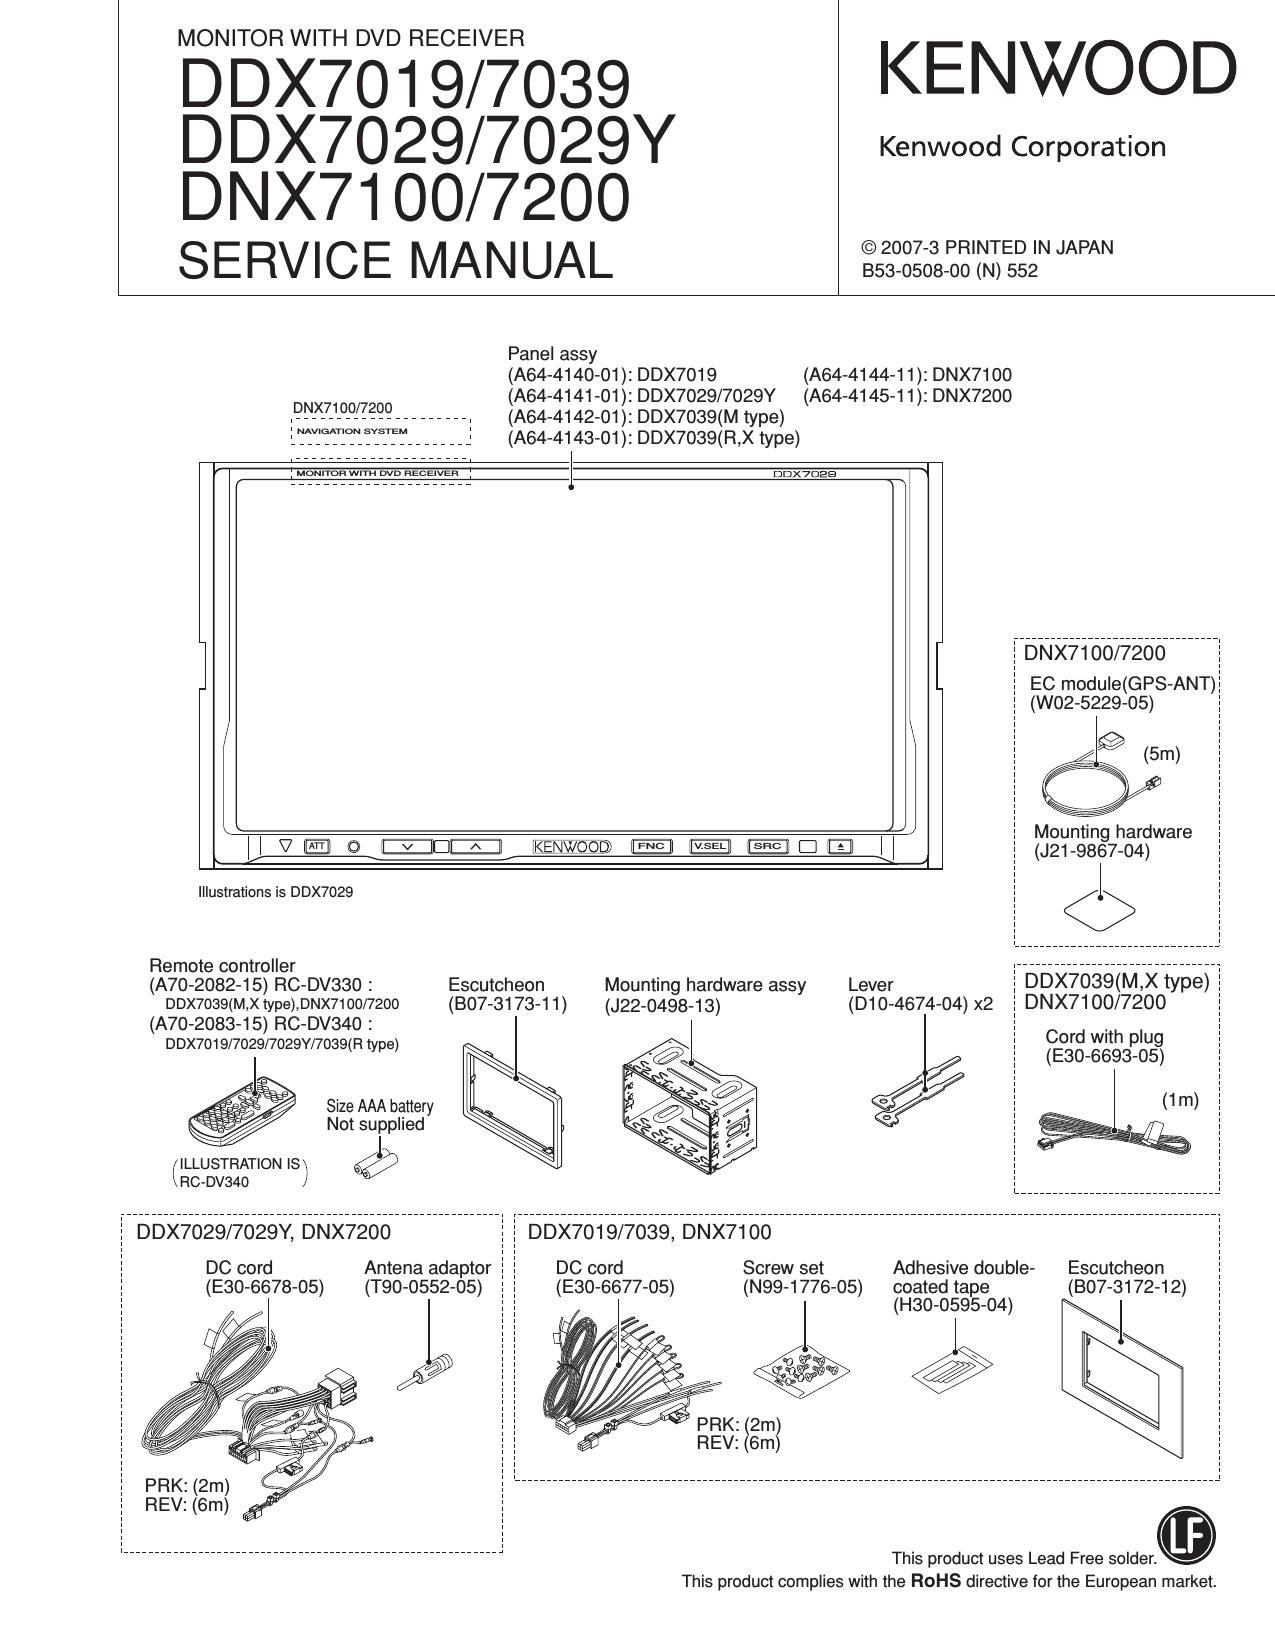 Kenwood DDX 7039 Service Manual